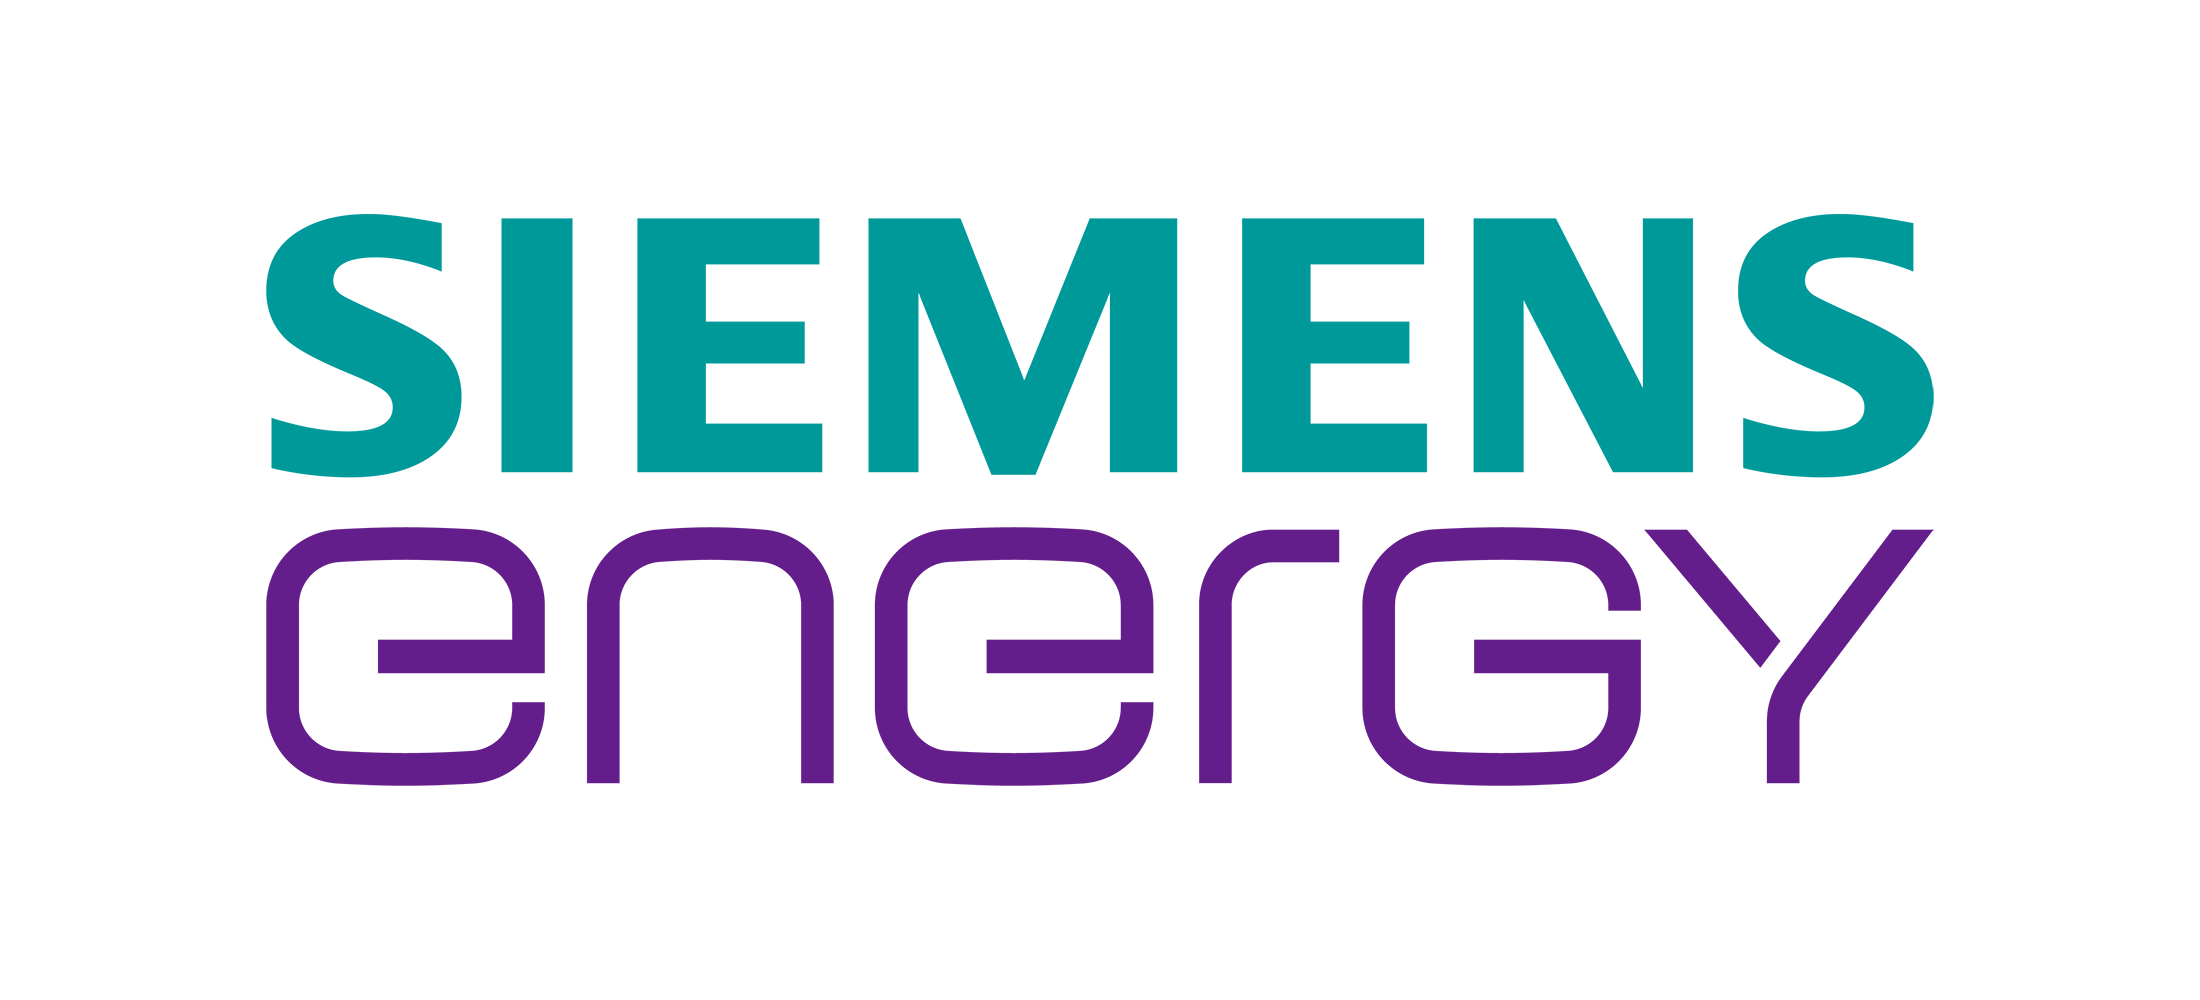 Siemens Energy, s.r.o.